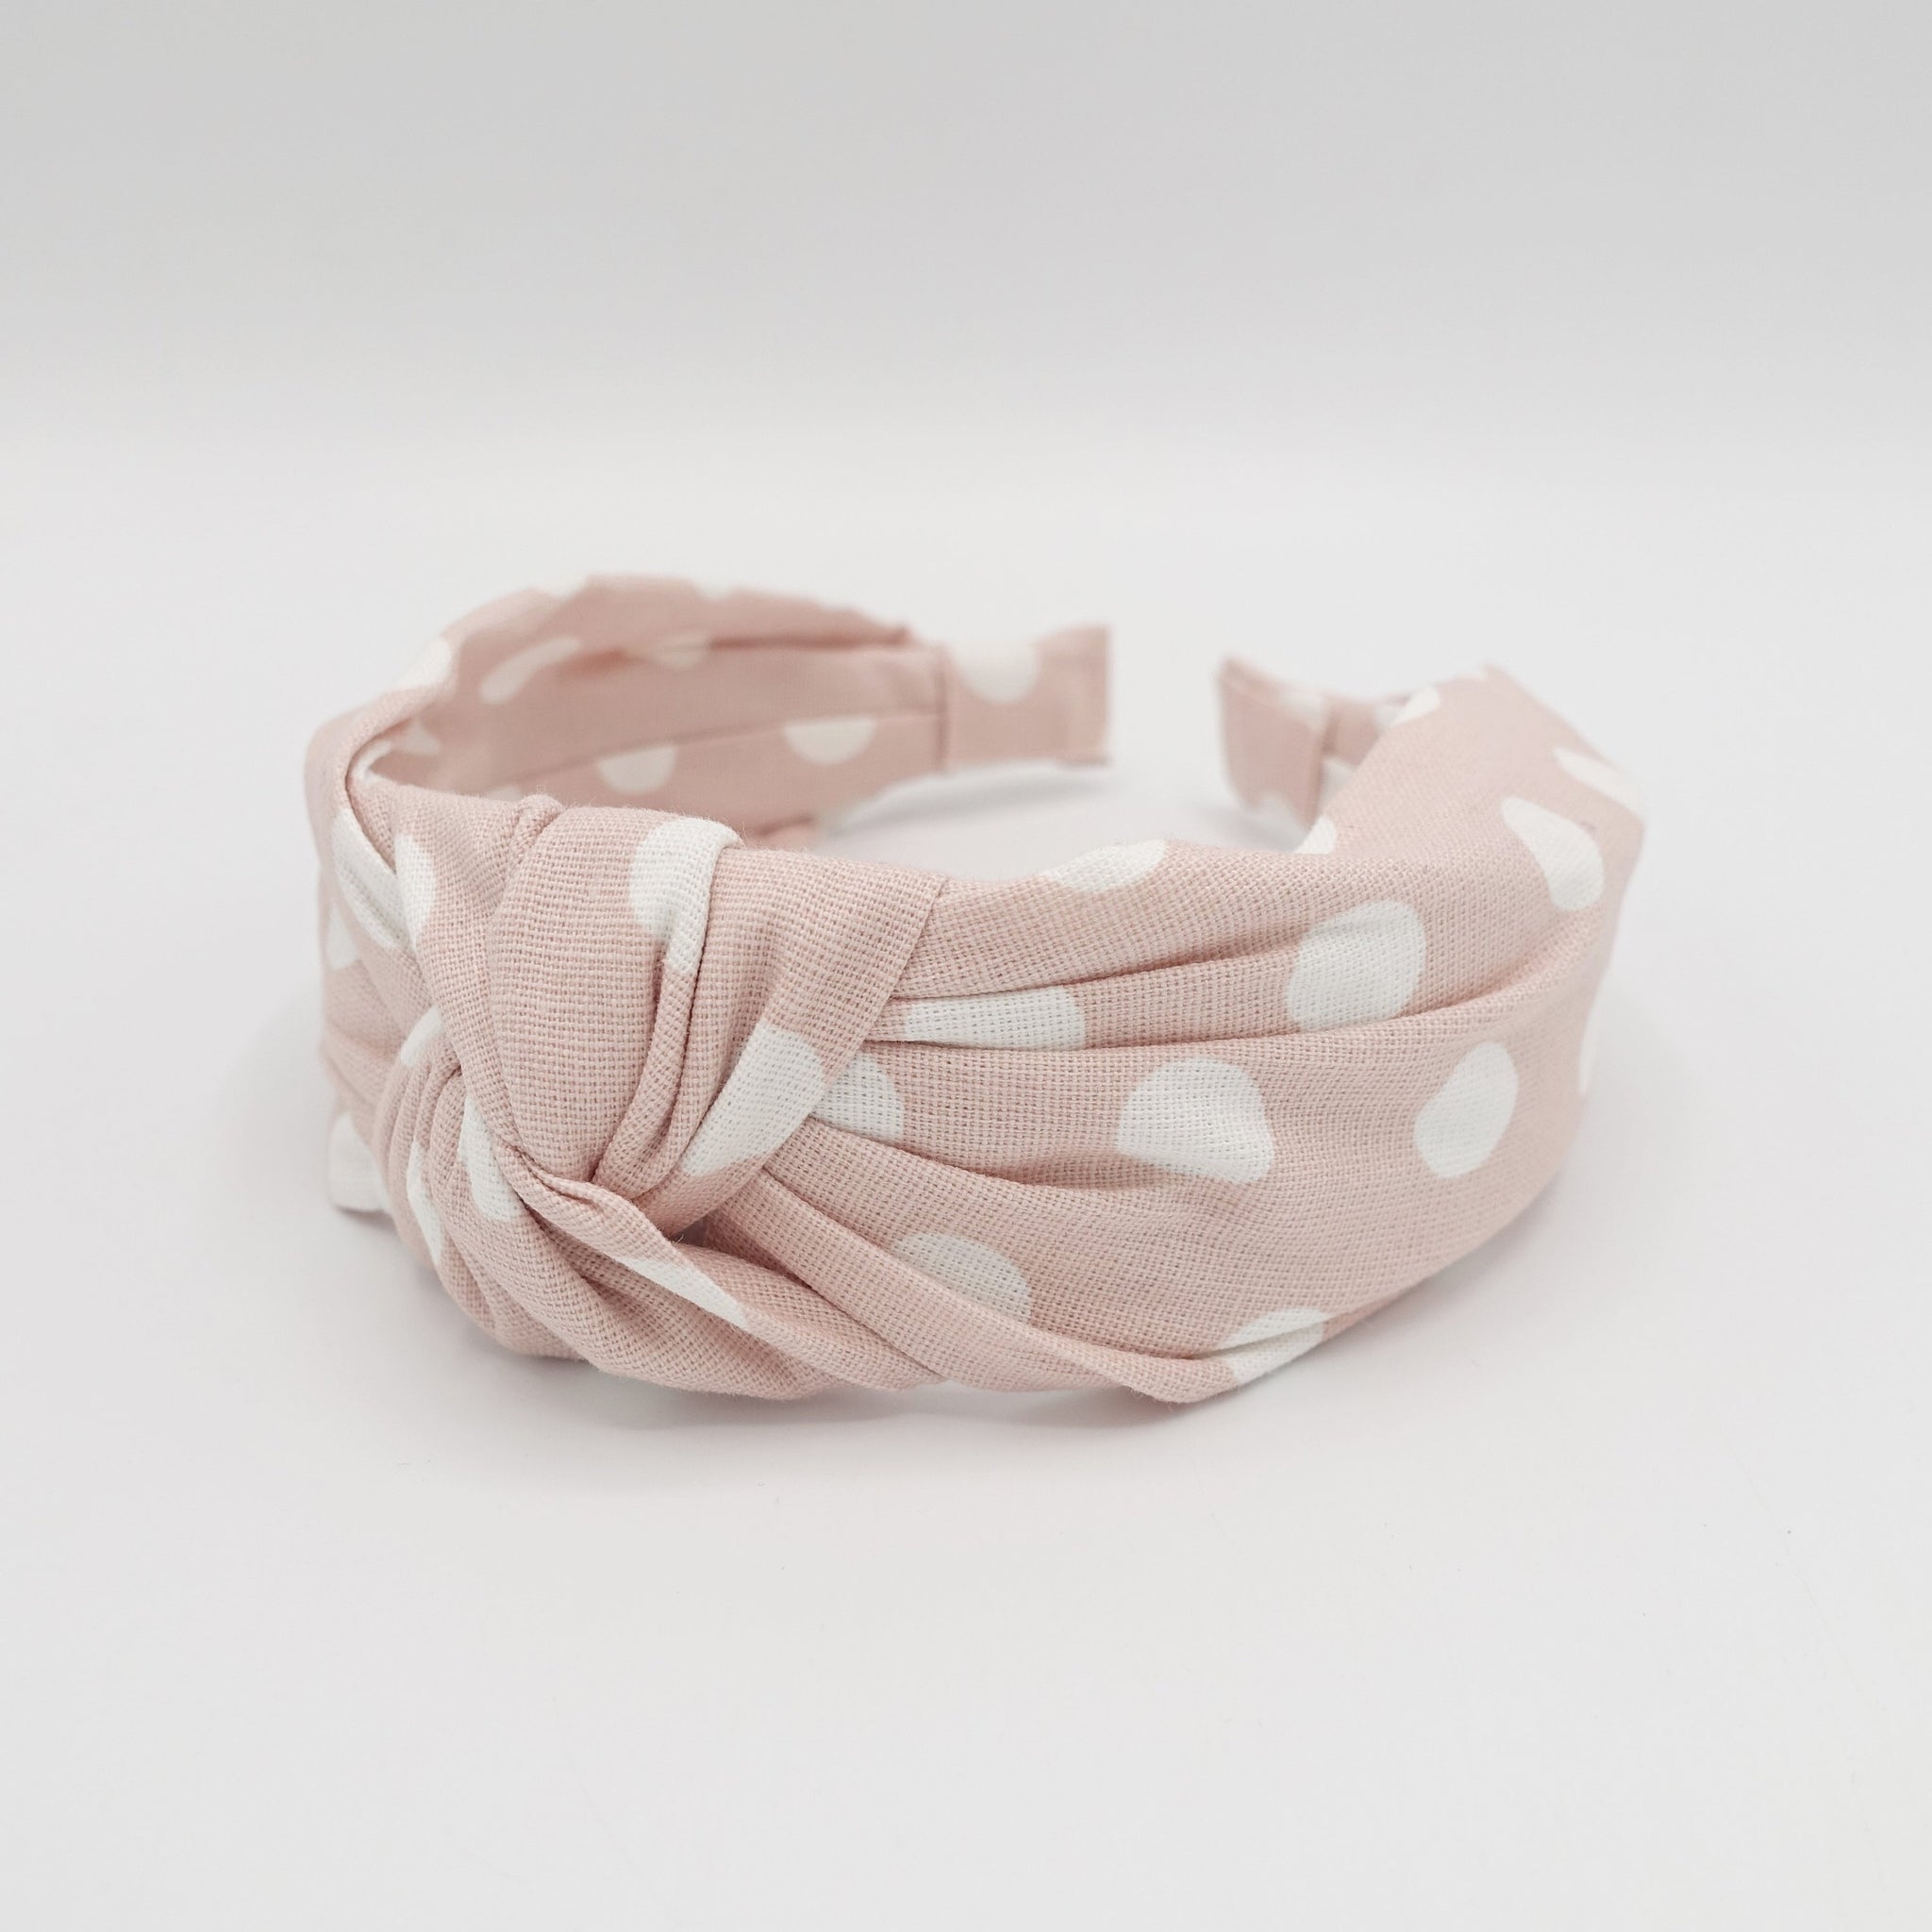 VeryShine Headband Pink cotton dot headband top knot hairband for women